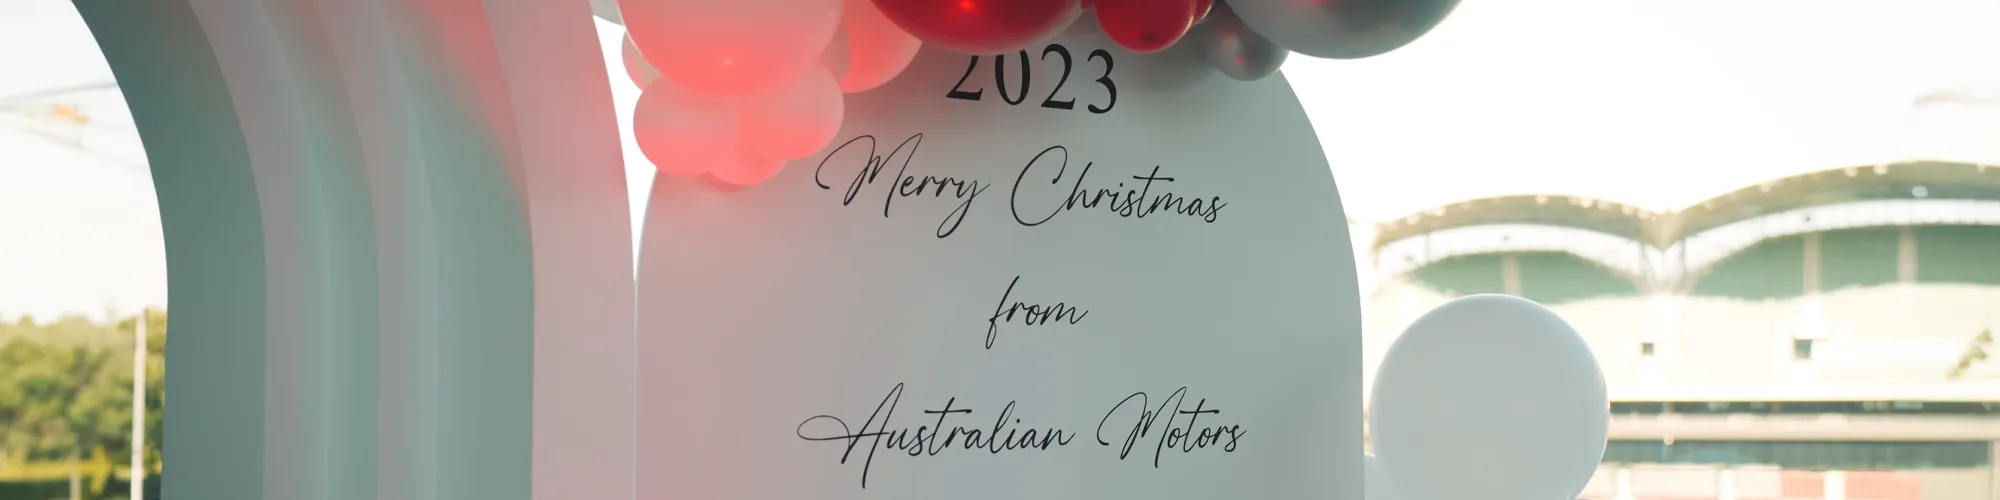 Australianotors Christmas Party Banner